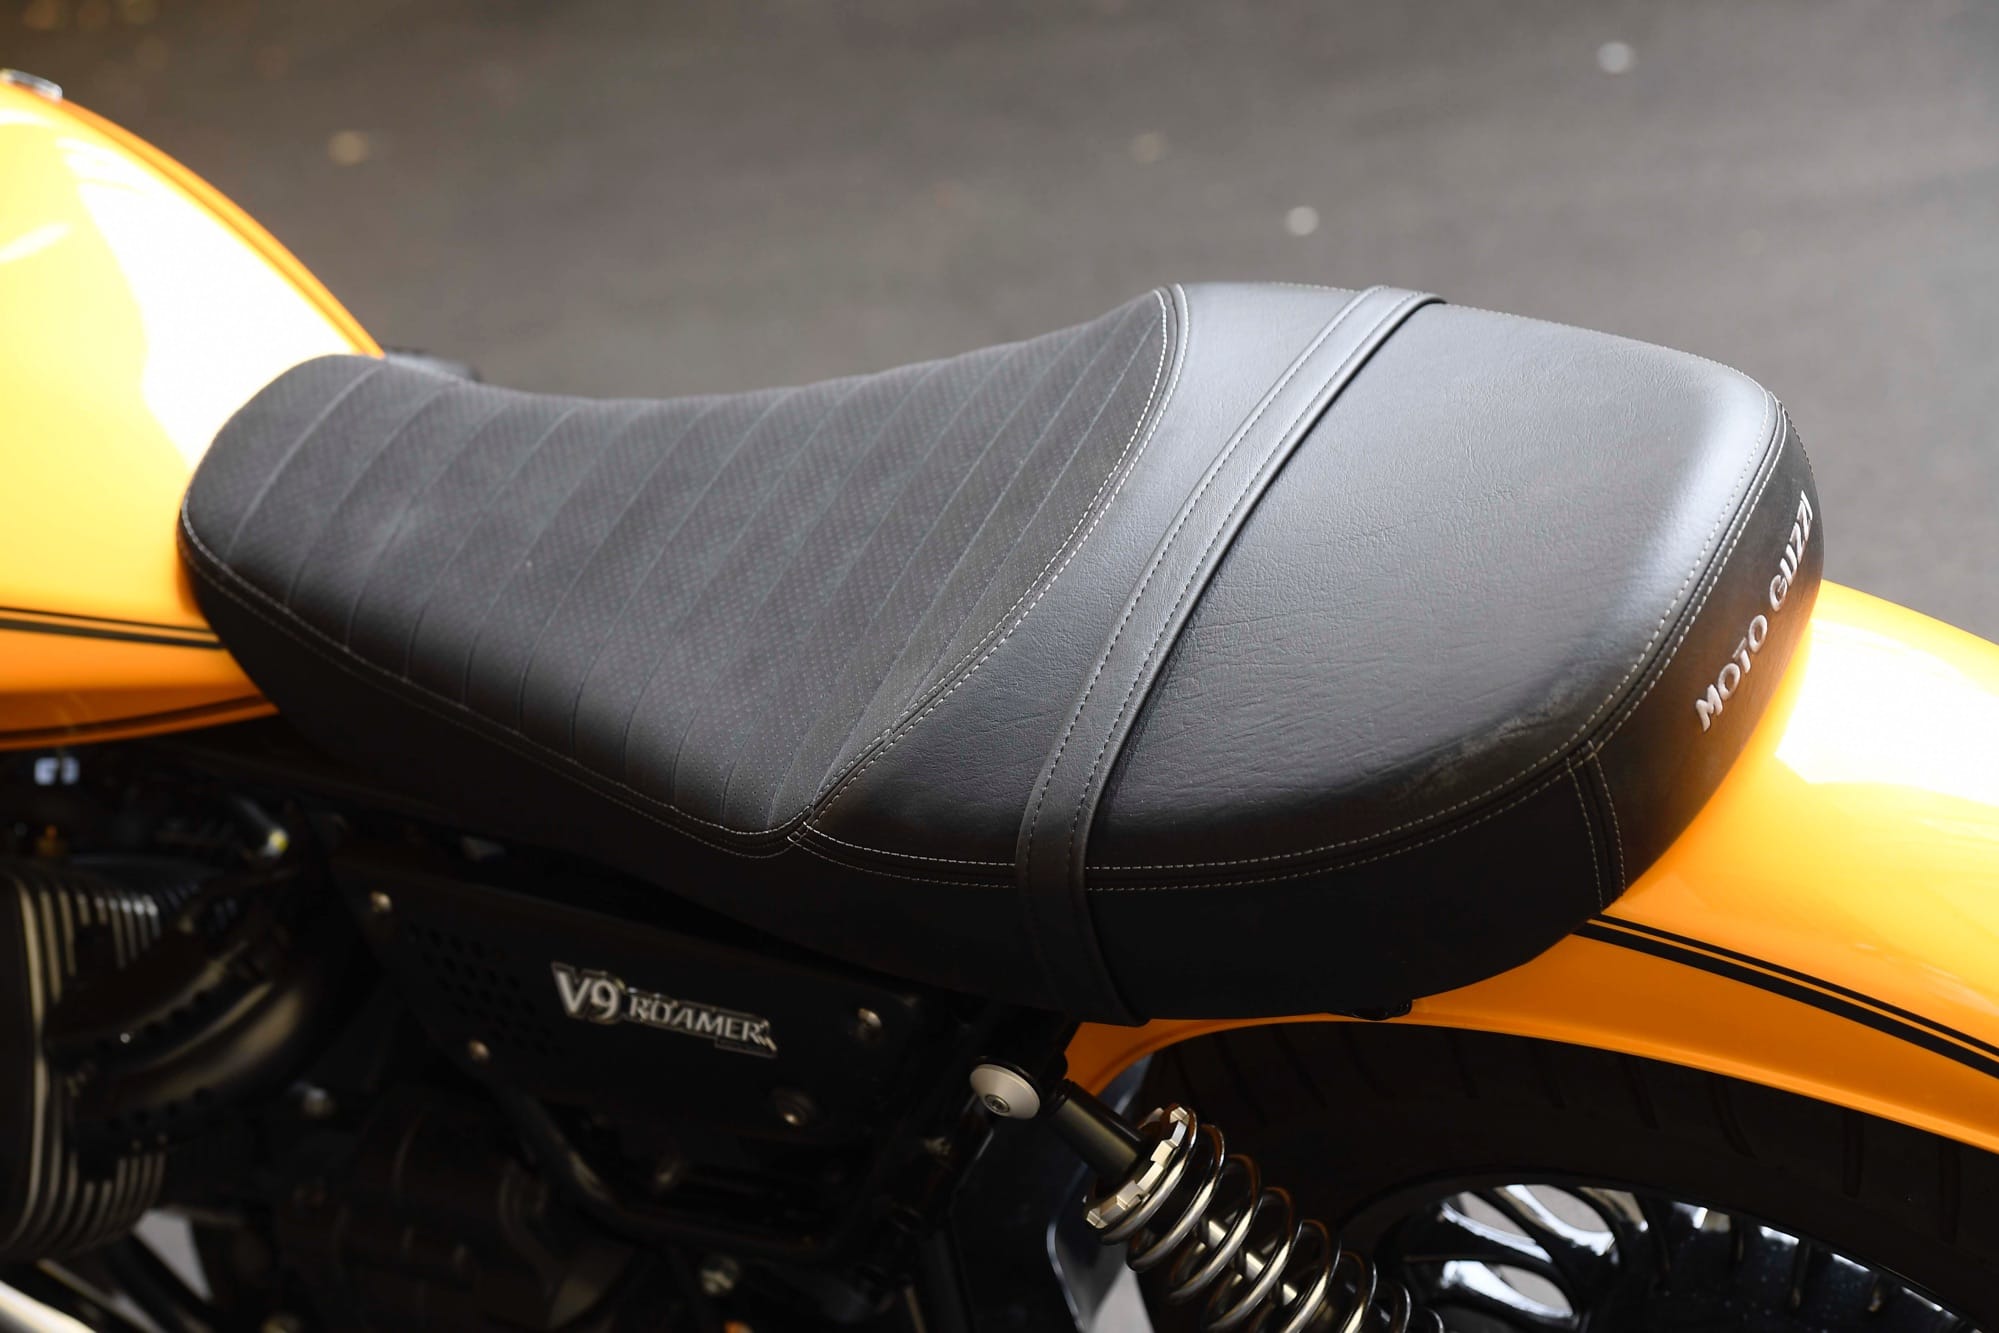 Moto Guzzi V9, Custom Bike for cities and distances. 850cc